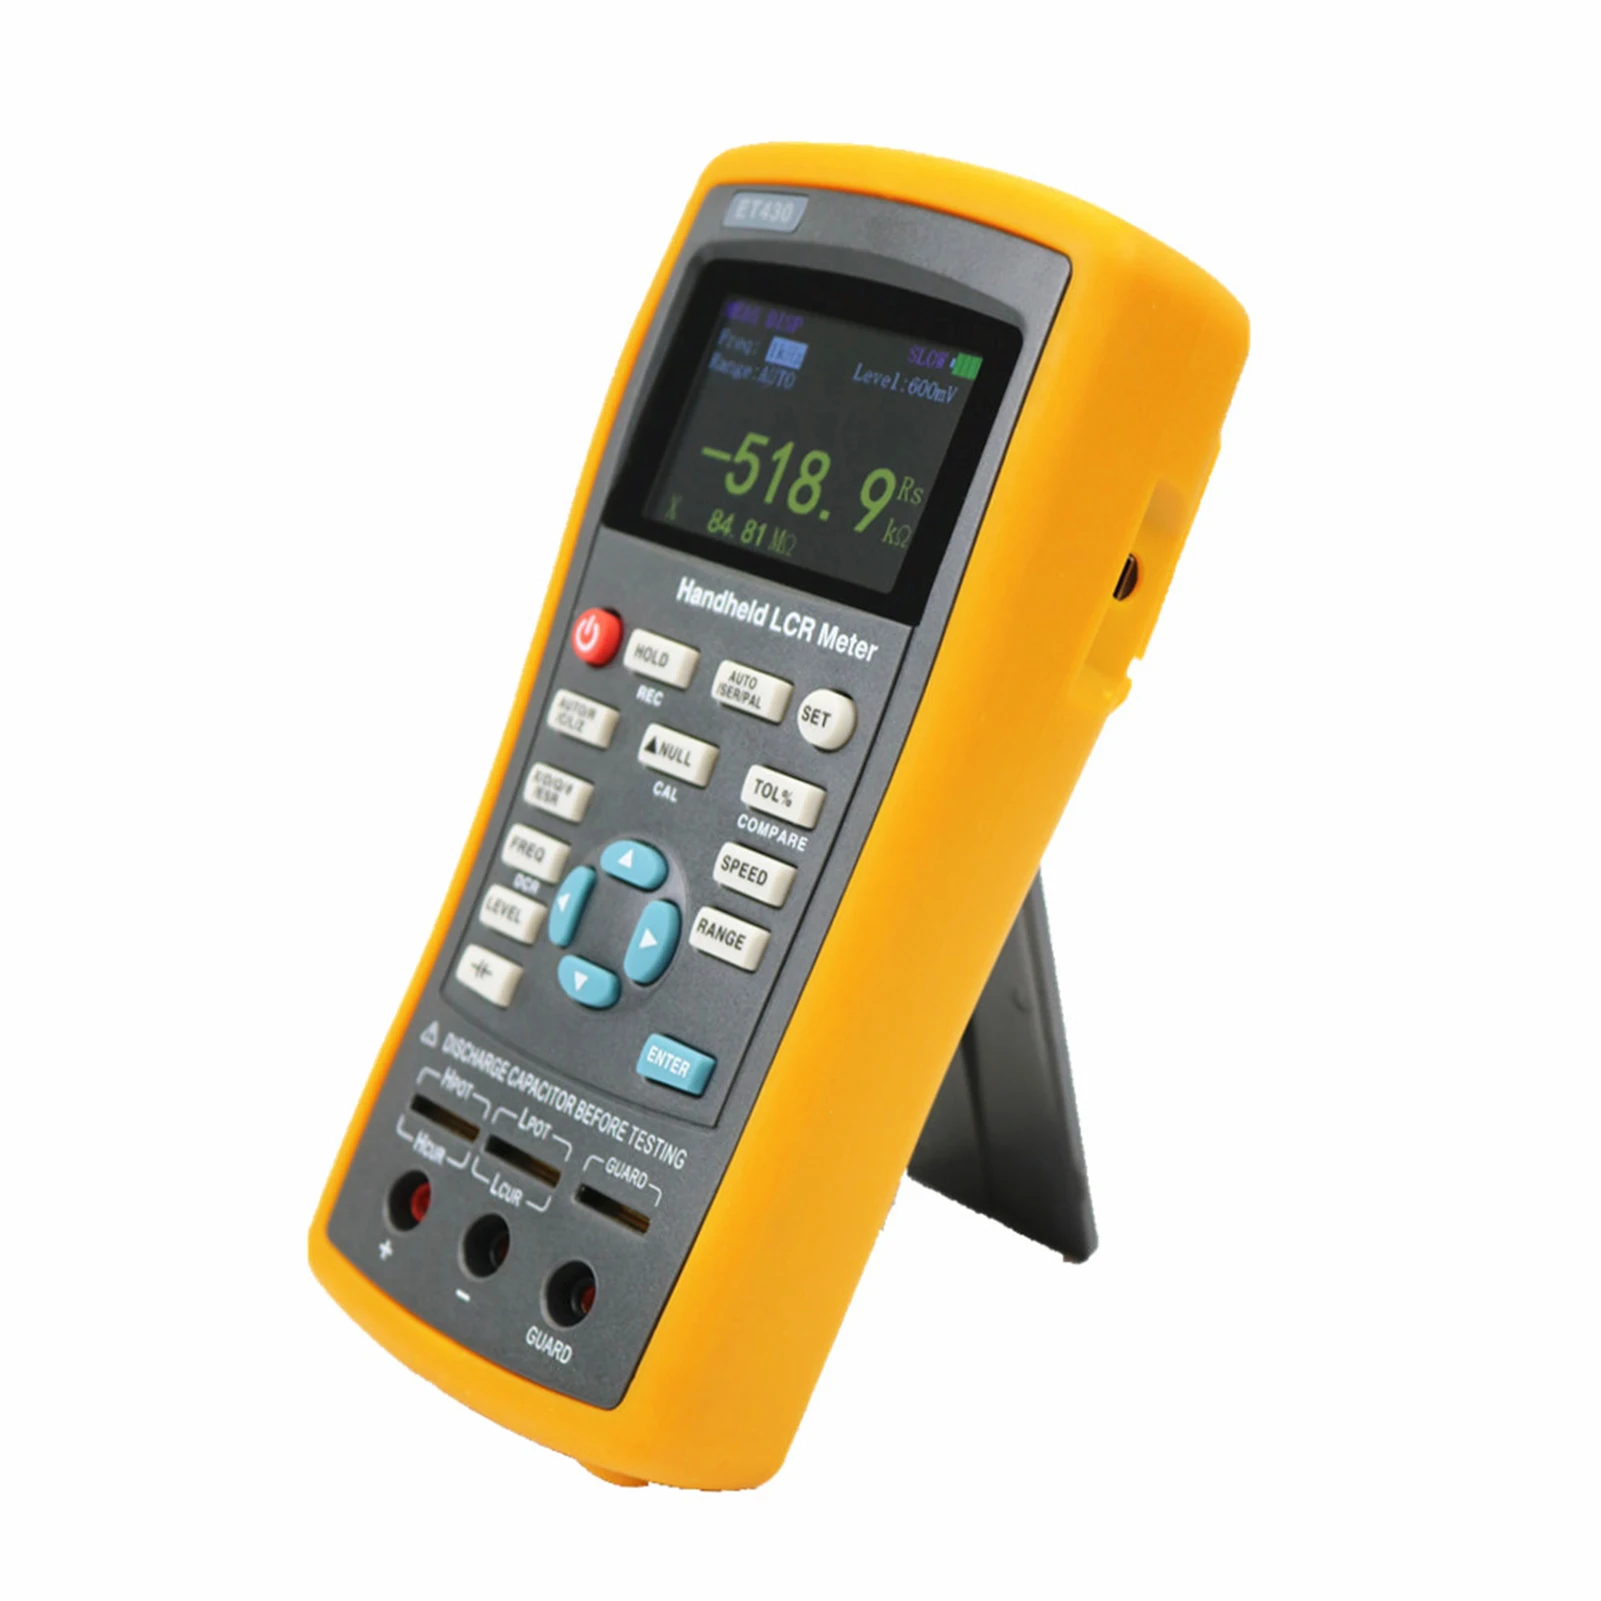 Resistance Electrolytic Capacitance Measuring Digital Tester Multifunctional /-0.2% Accuracy ZGQA-GQA Digital LCR Bridge Handheld LCR Meter with Backlight Display ET430B 